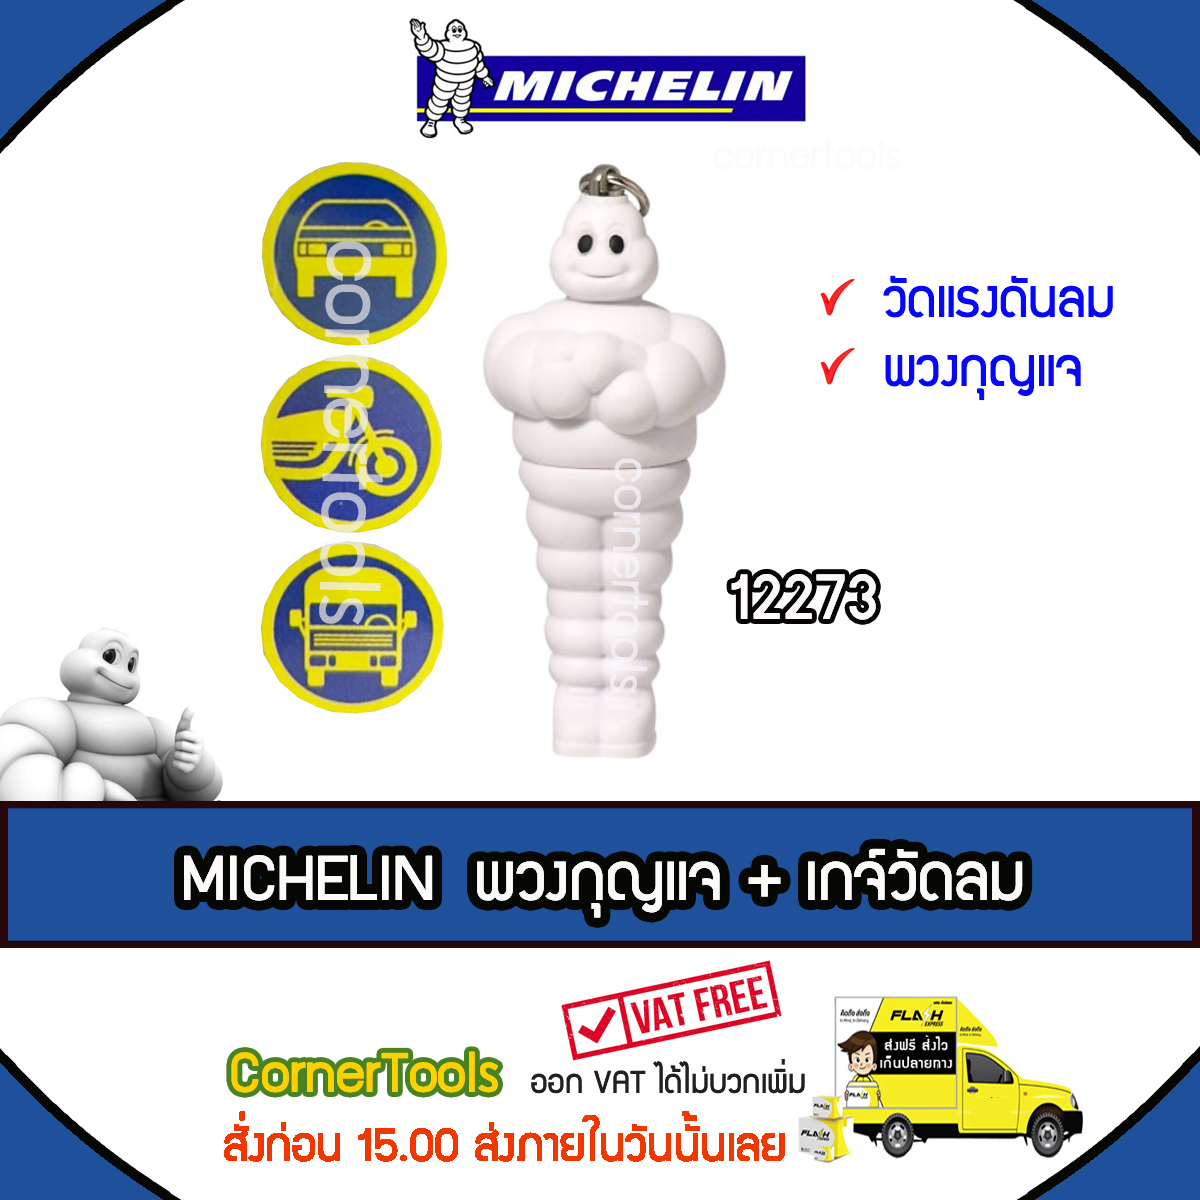 MICHELIN พวงกุญแจ + เกจ์วัดลม มิชลินแมน Digital Tyre Gauge with Keychain รุ่น 12273 ***ส่งฟรีแฟลช สั่งก่อนบ่ายสามส่งภายในวัน***